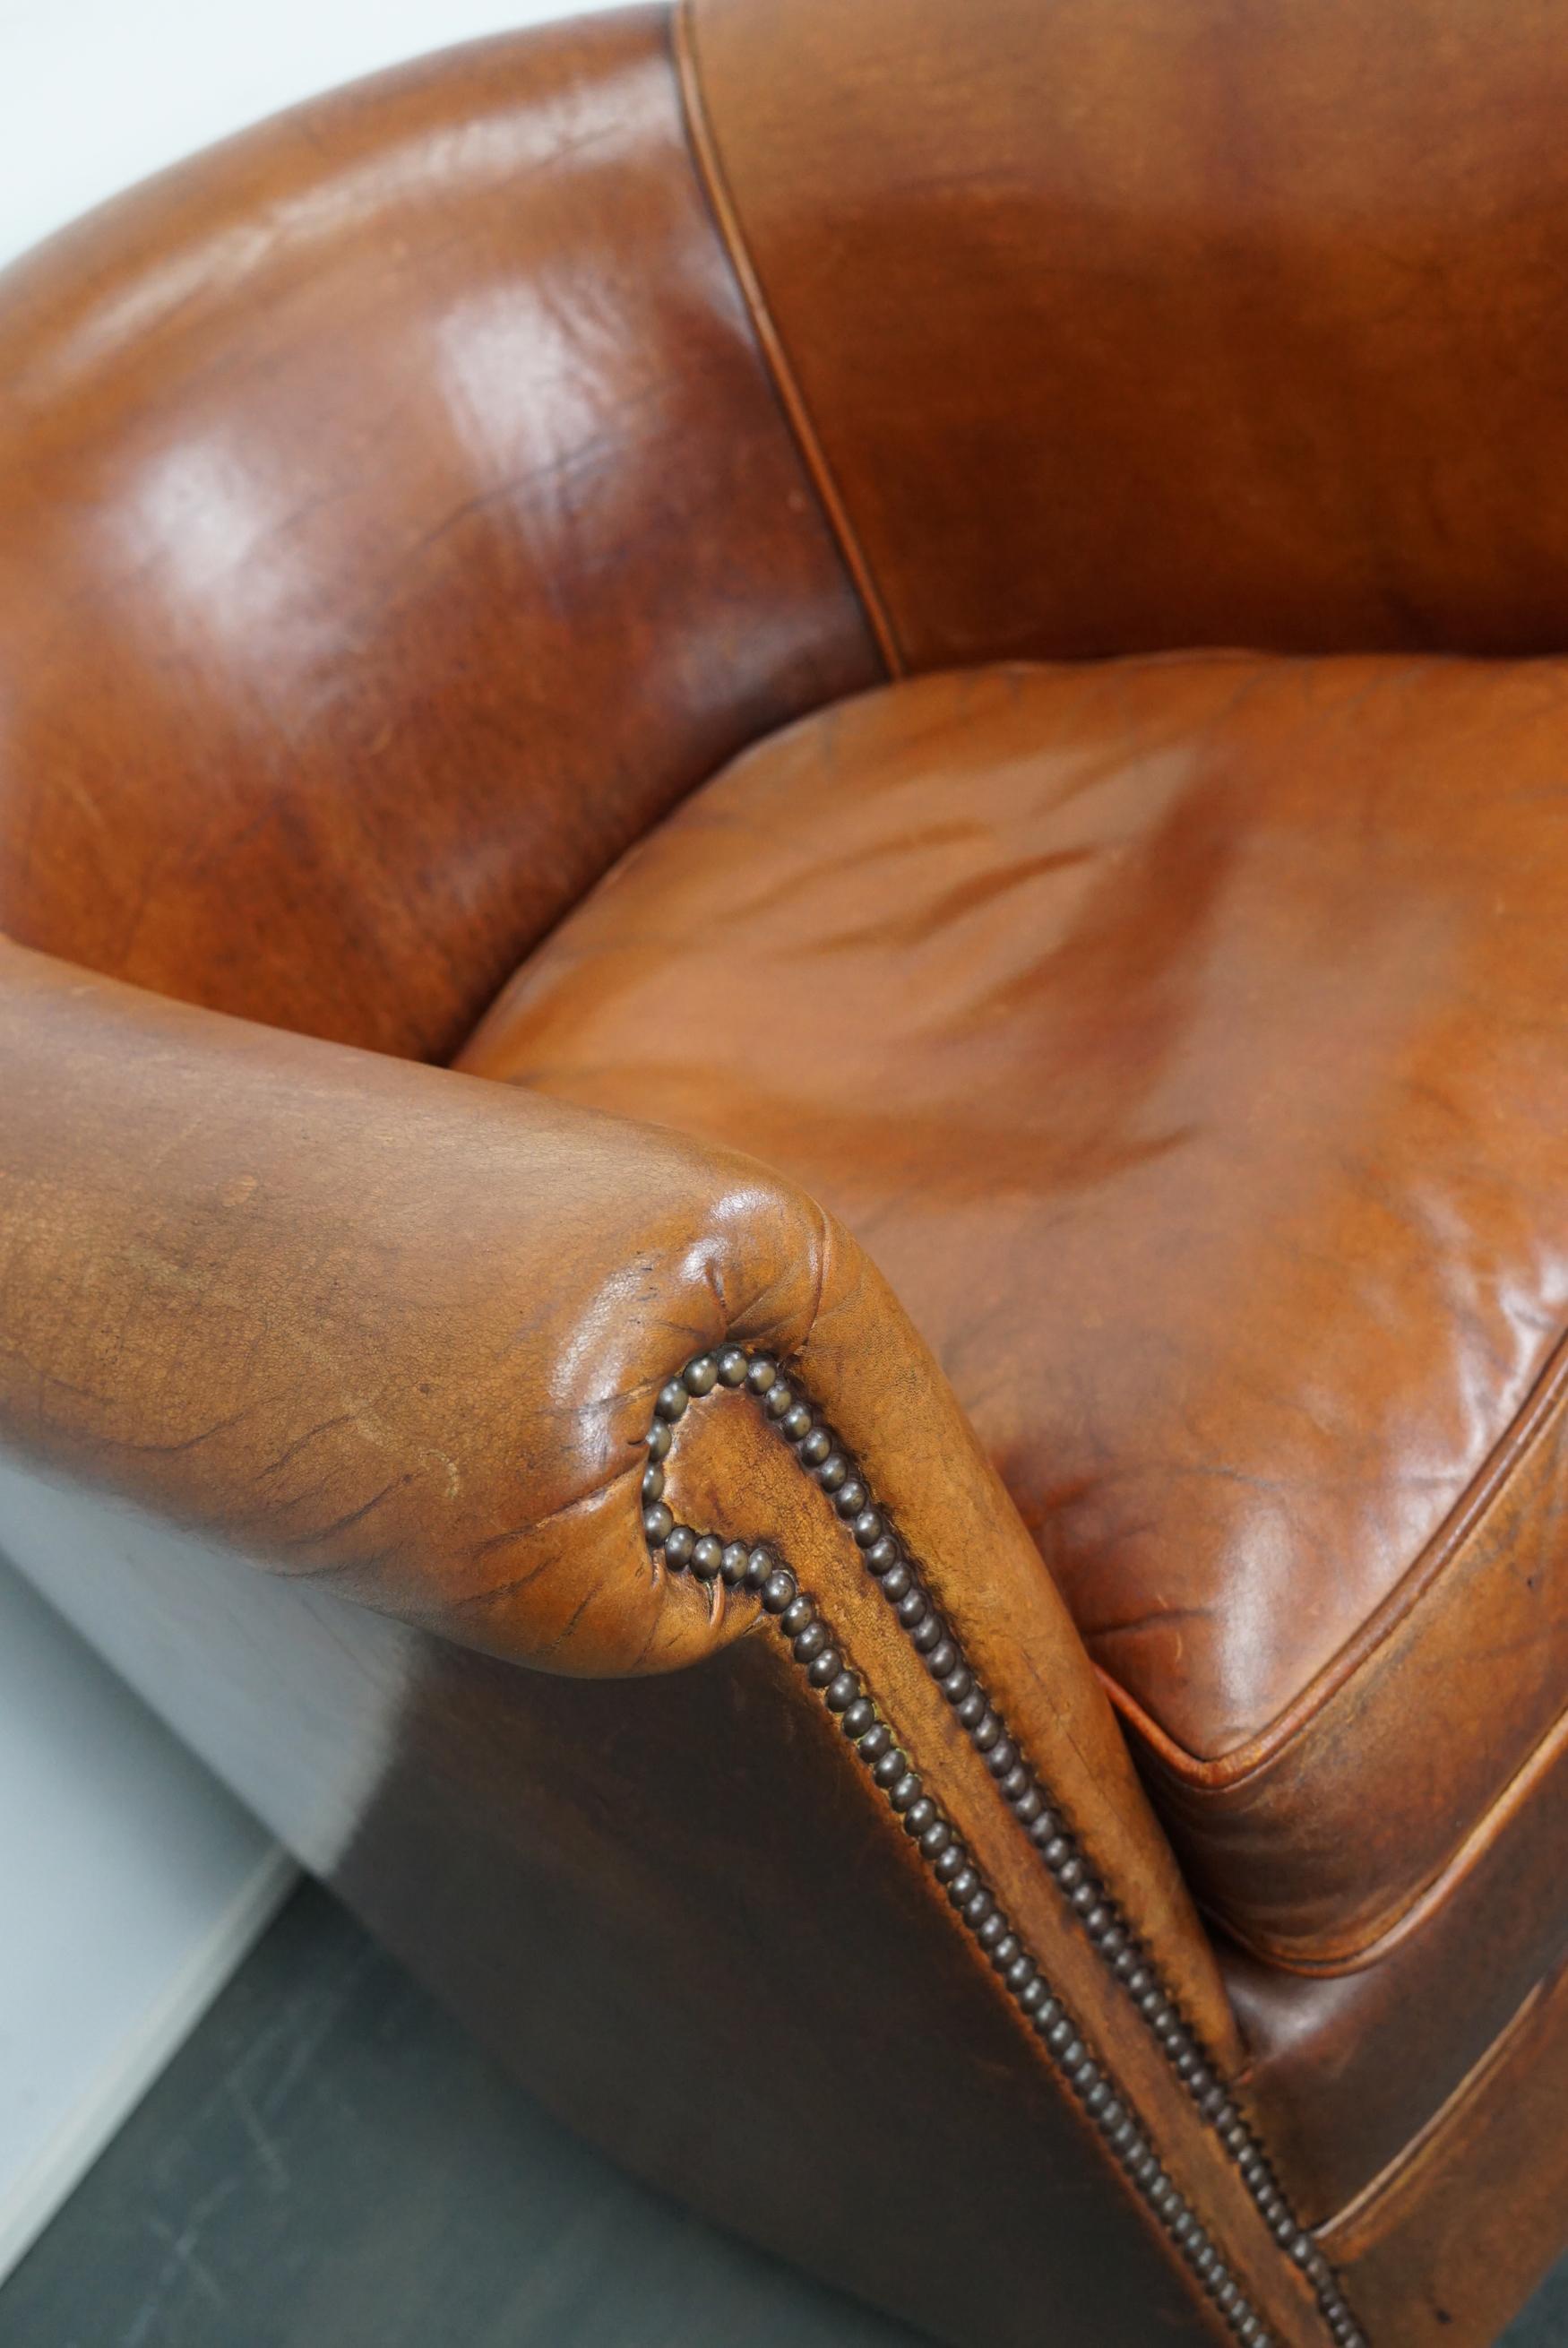 Industrial Vintage Dutch Cognac Leather Club Chair